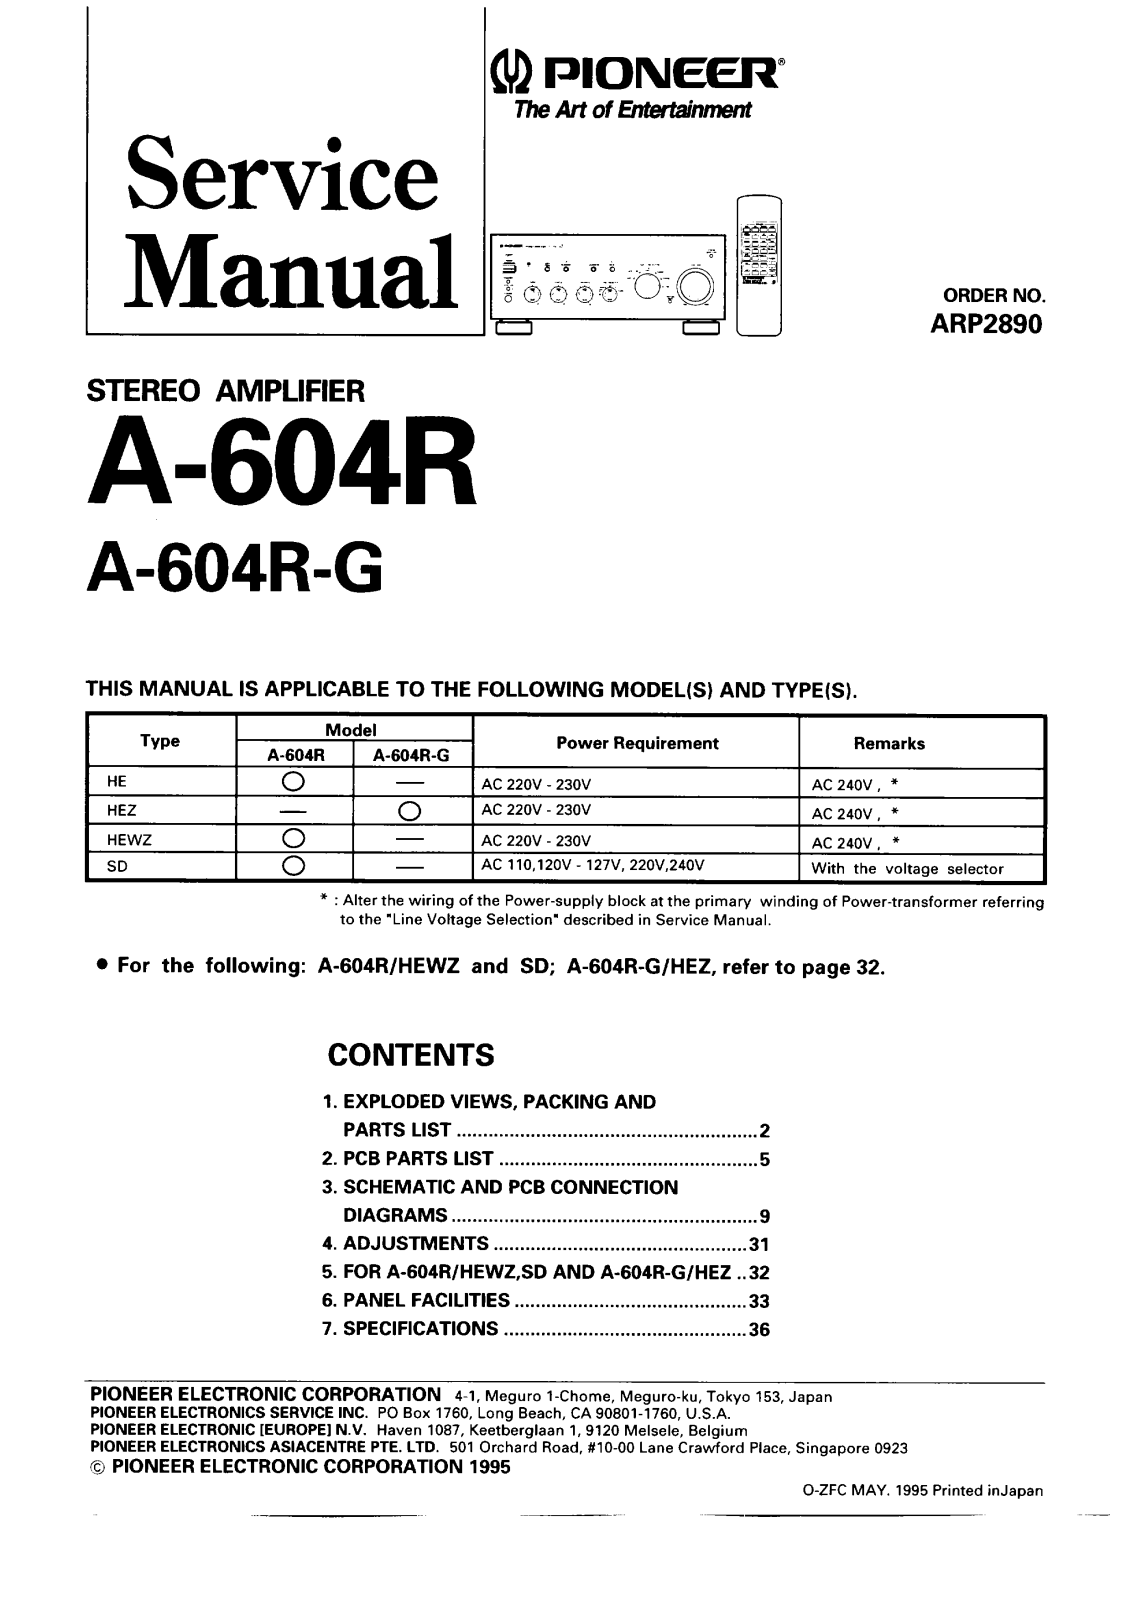 Pioneer A-604-R Service manual